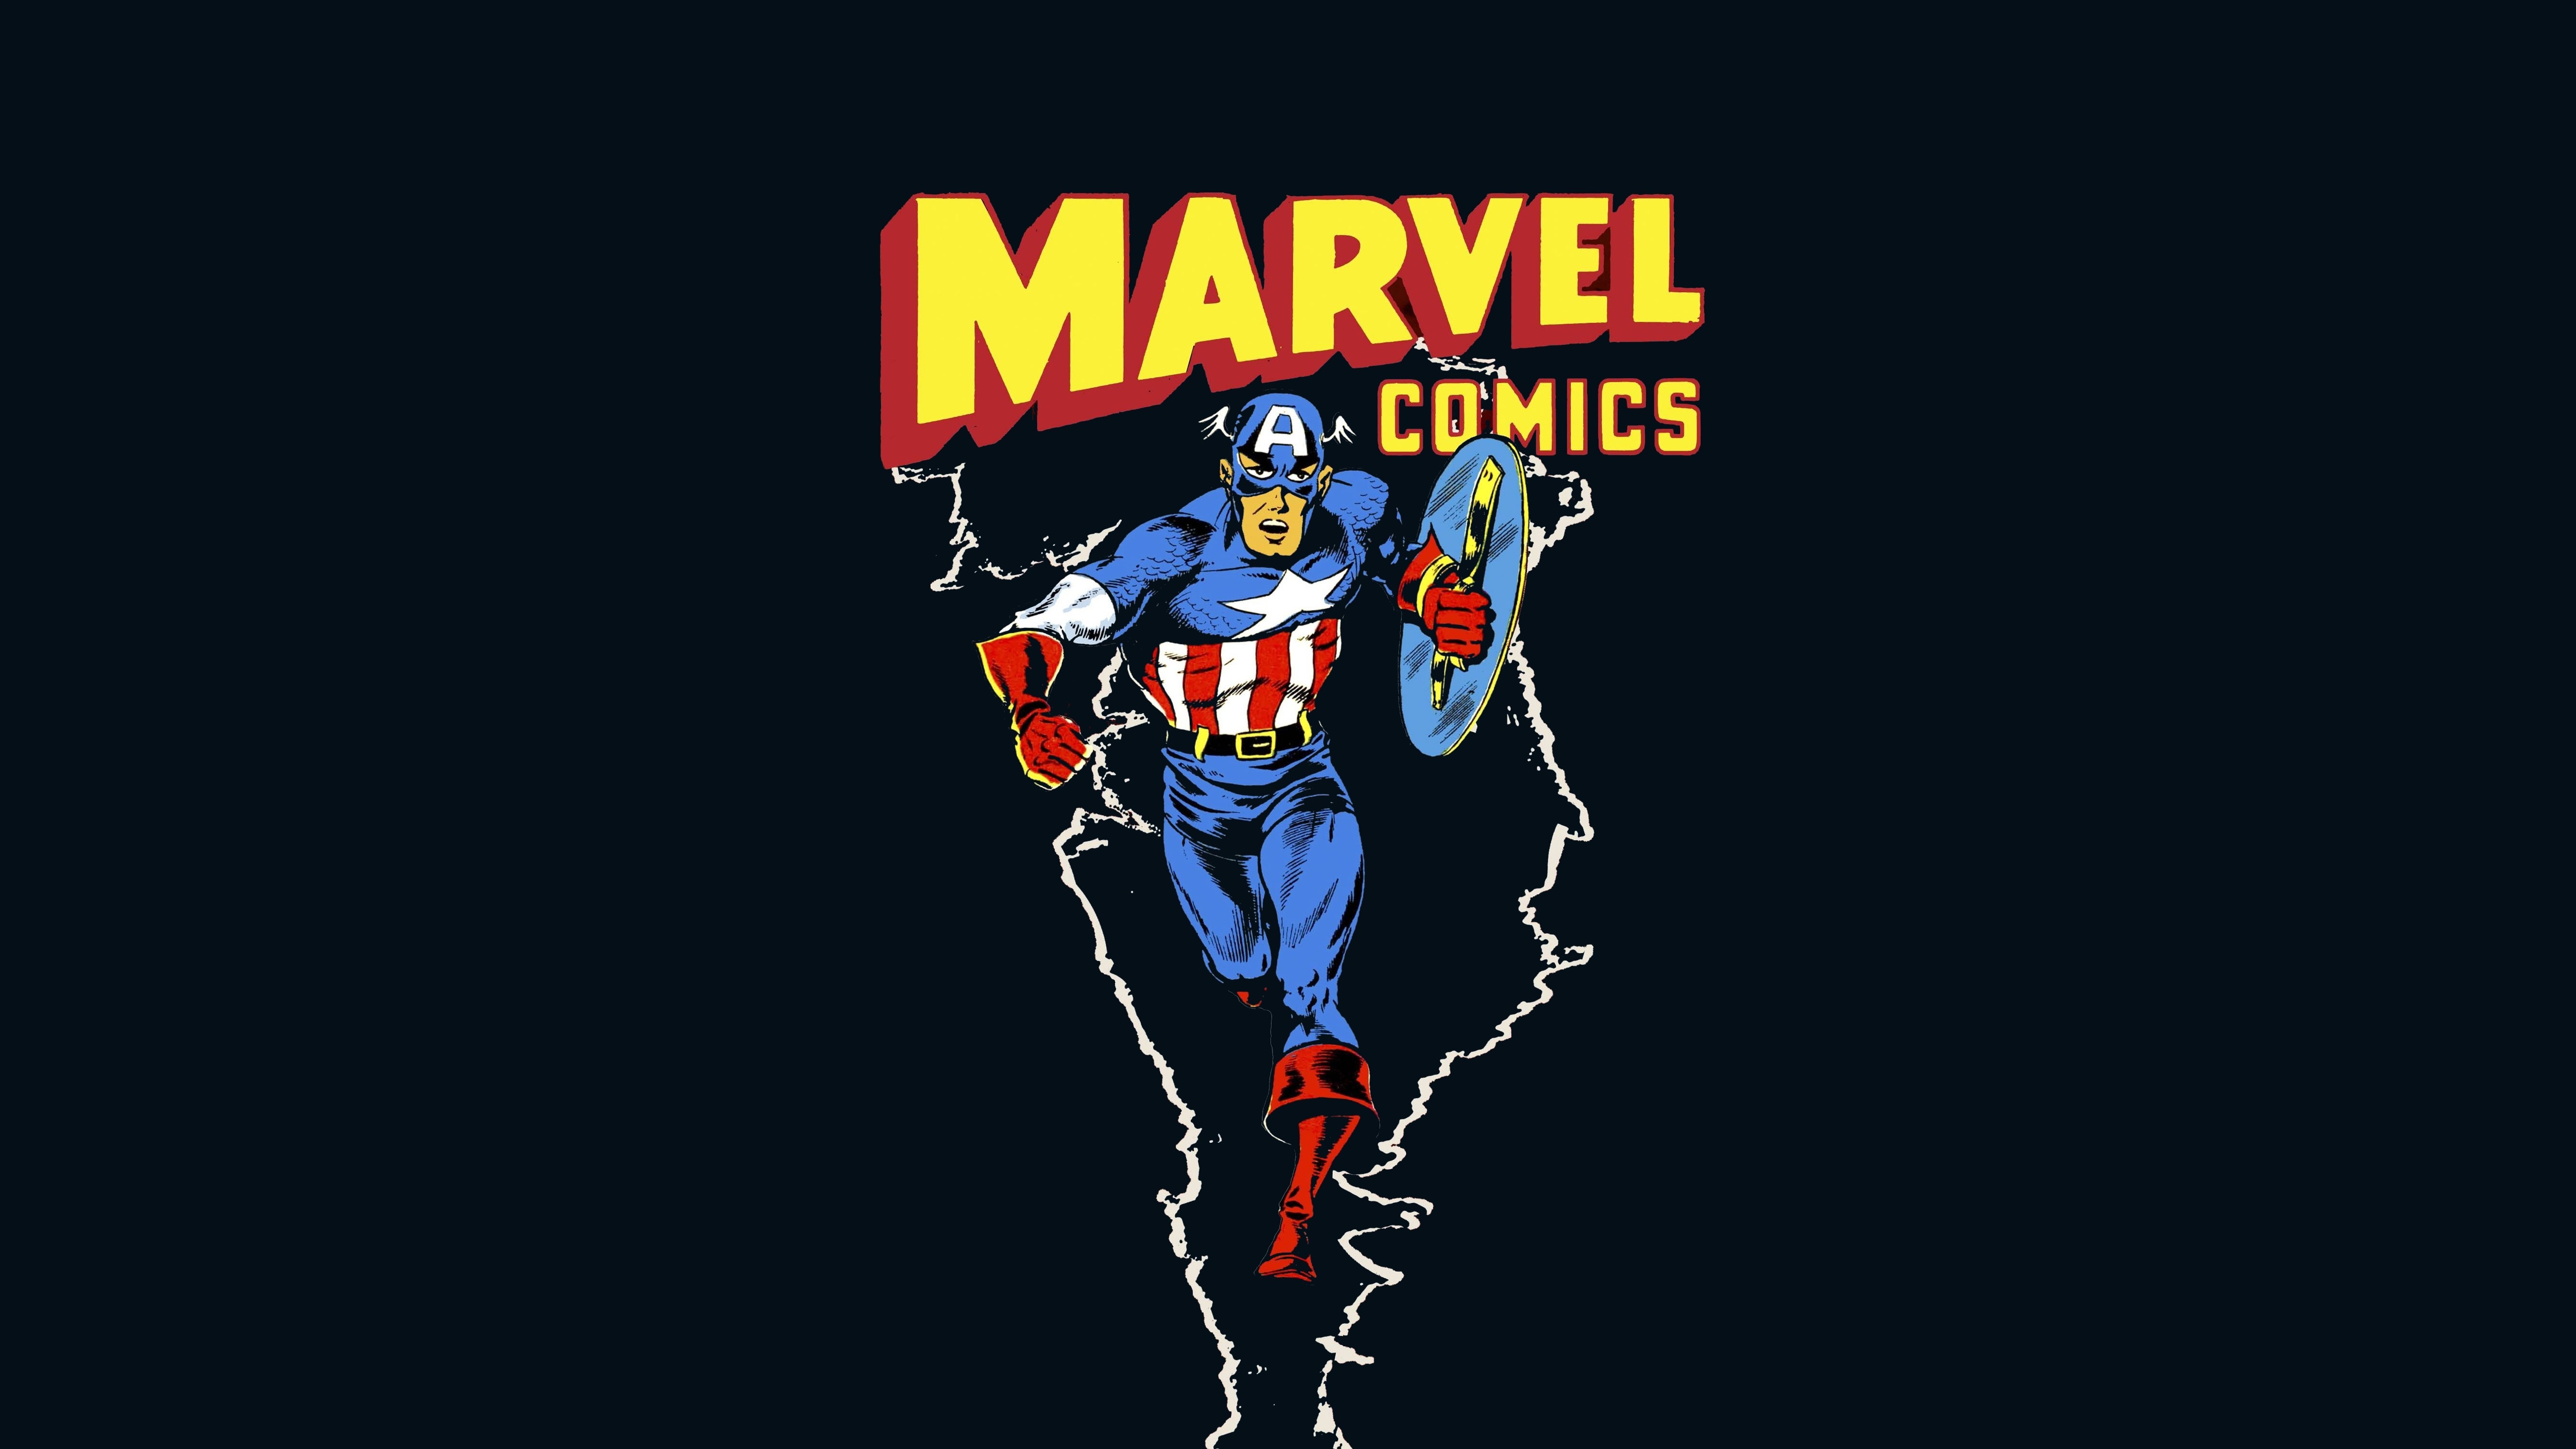 Marvel Ics HD Wallpaper Chris Evans Robert Downey Jr